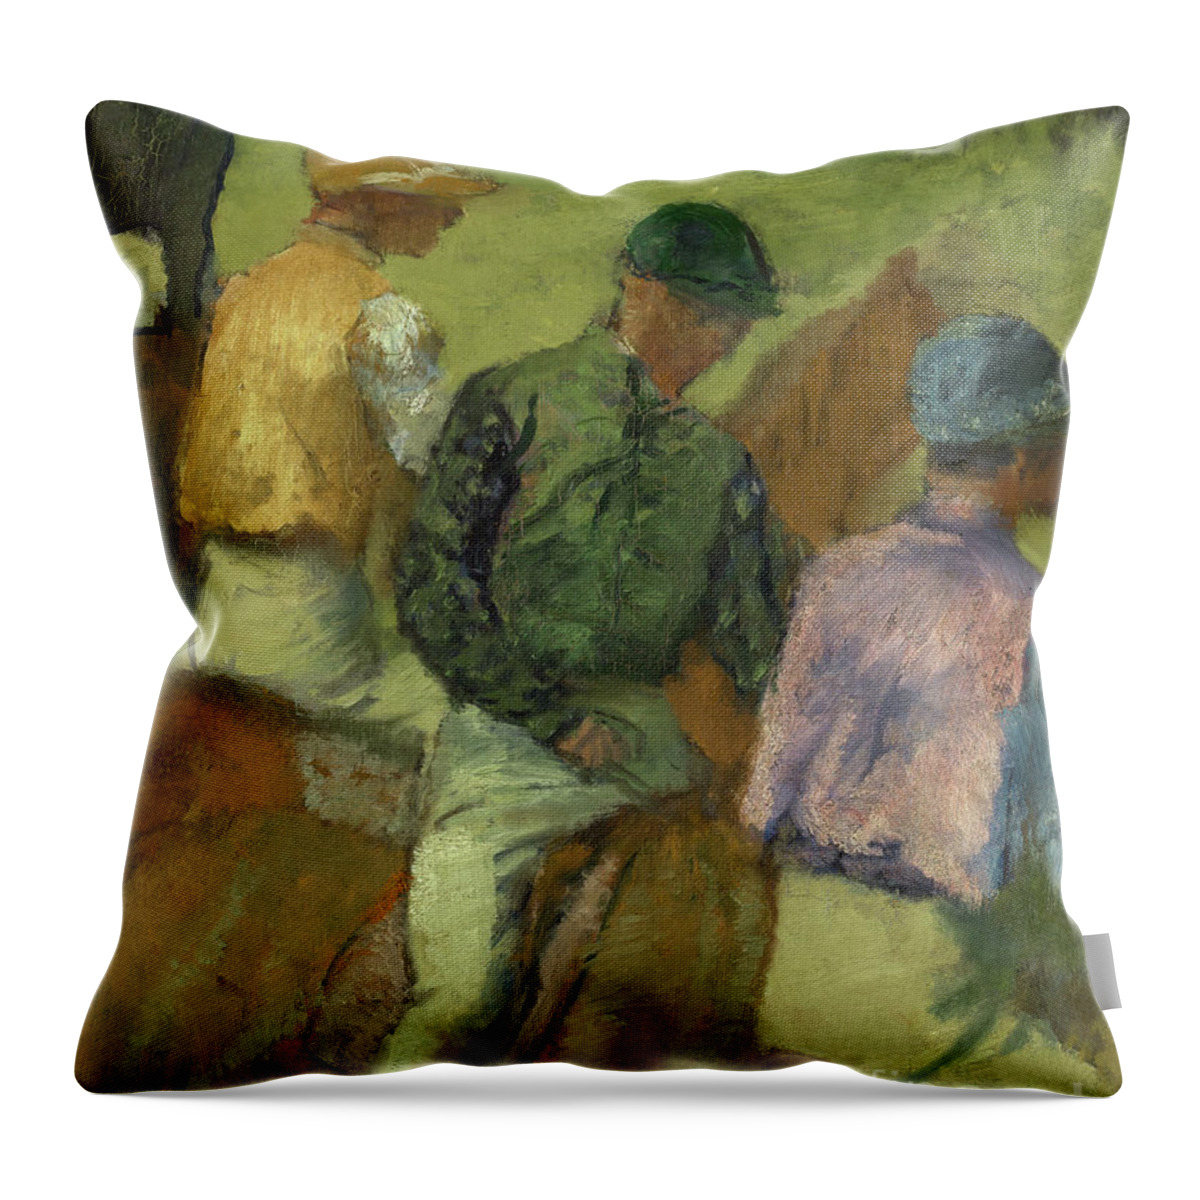 Degas Throw Pillow featuring the painting Four Jockeys by Edgar Degas